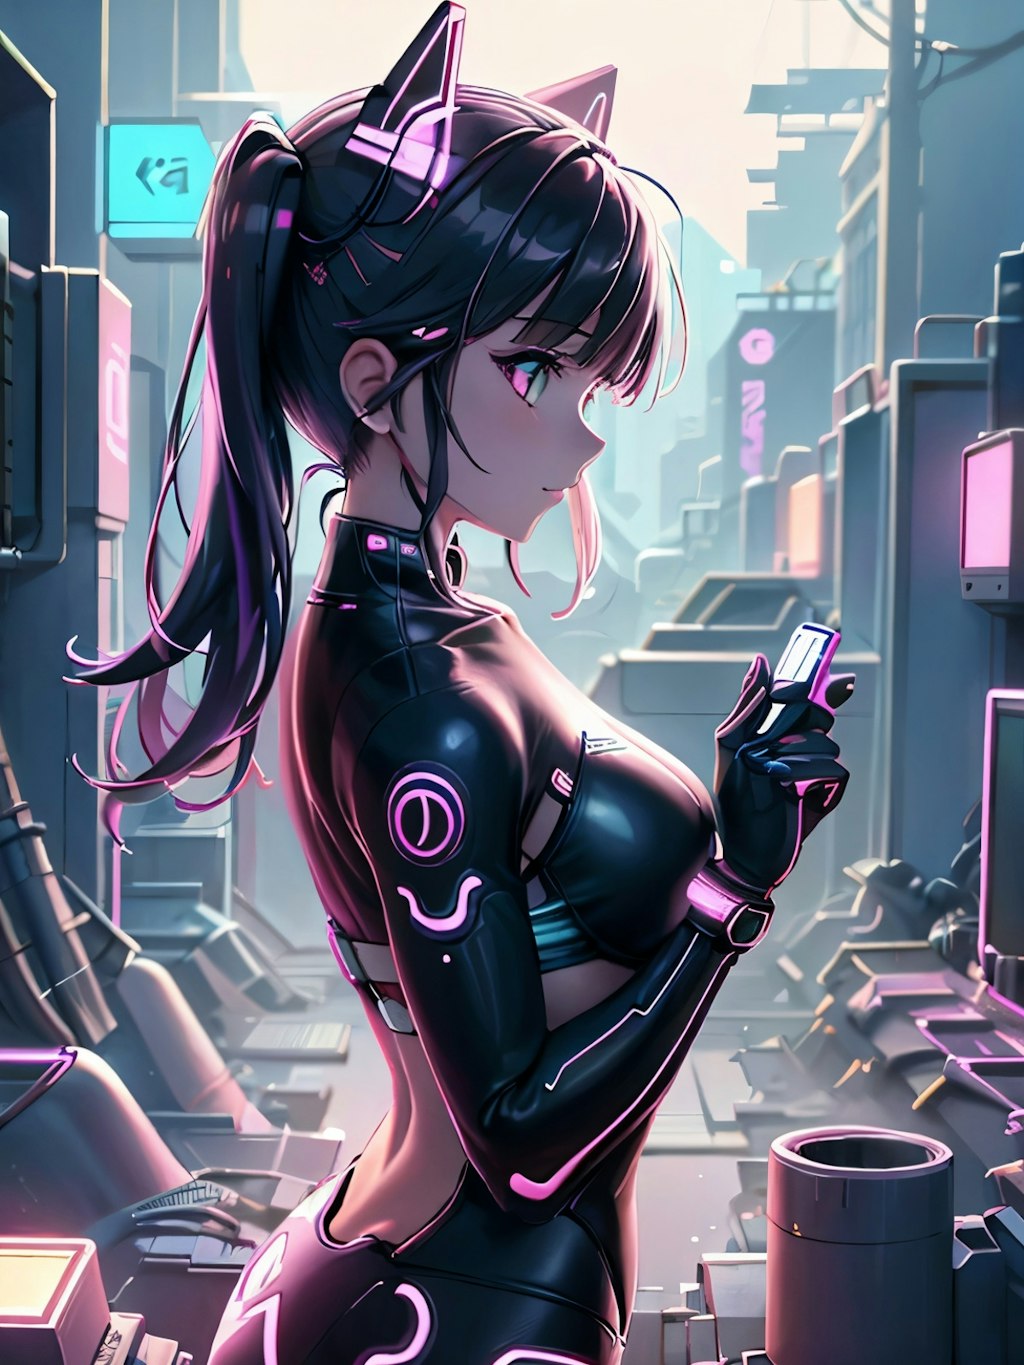 Cyber Girl